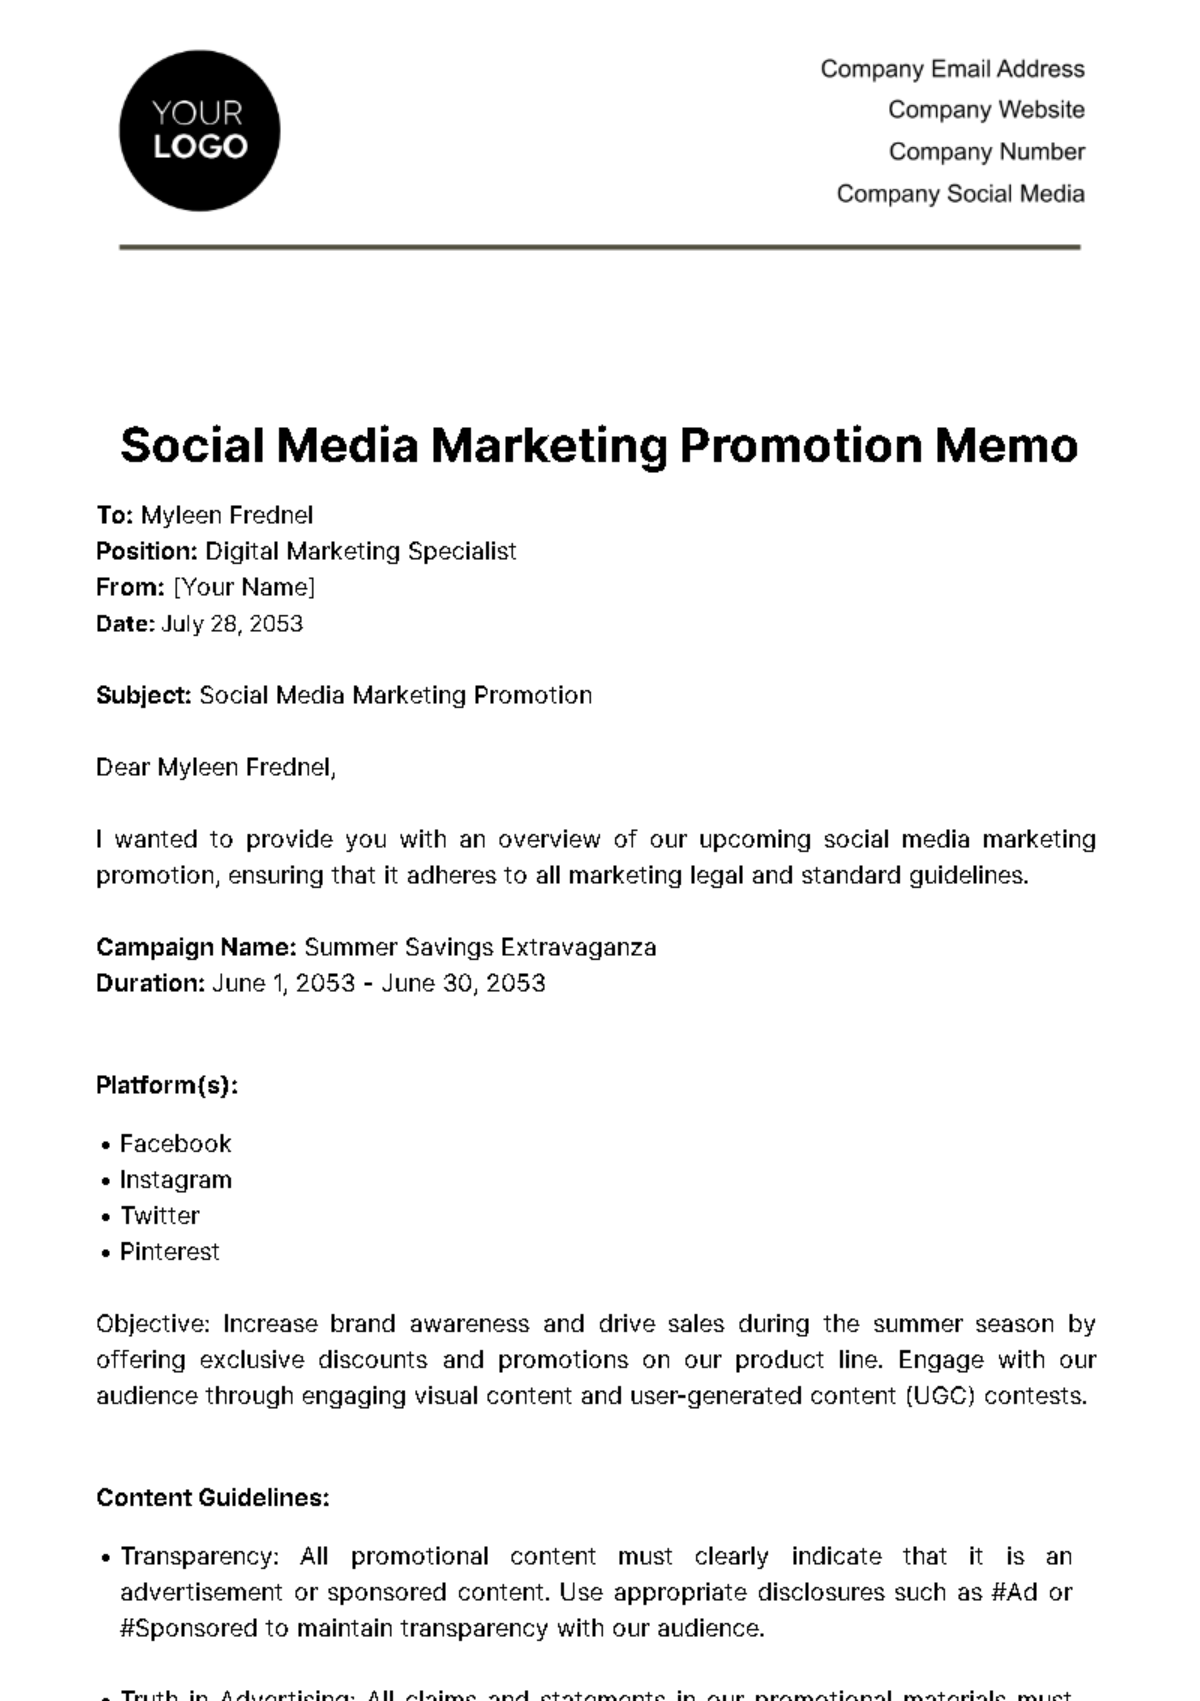 Free Social Media Marketing Promotion Memo Template